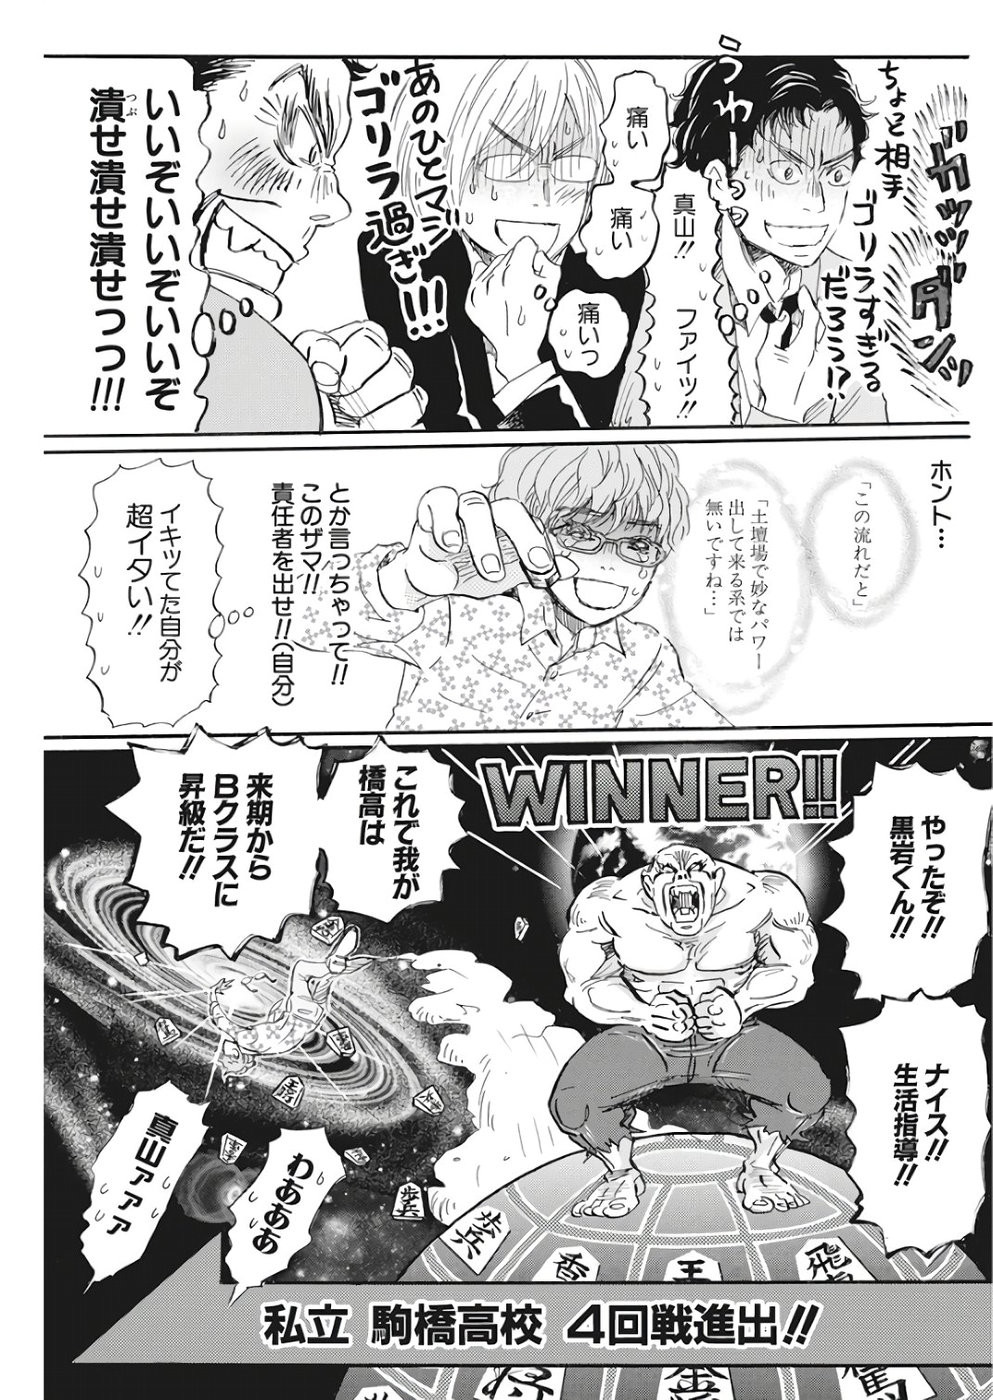 3 Gatsu no Lion - Chapter 151 - Page 5